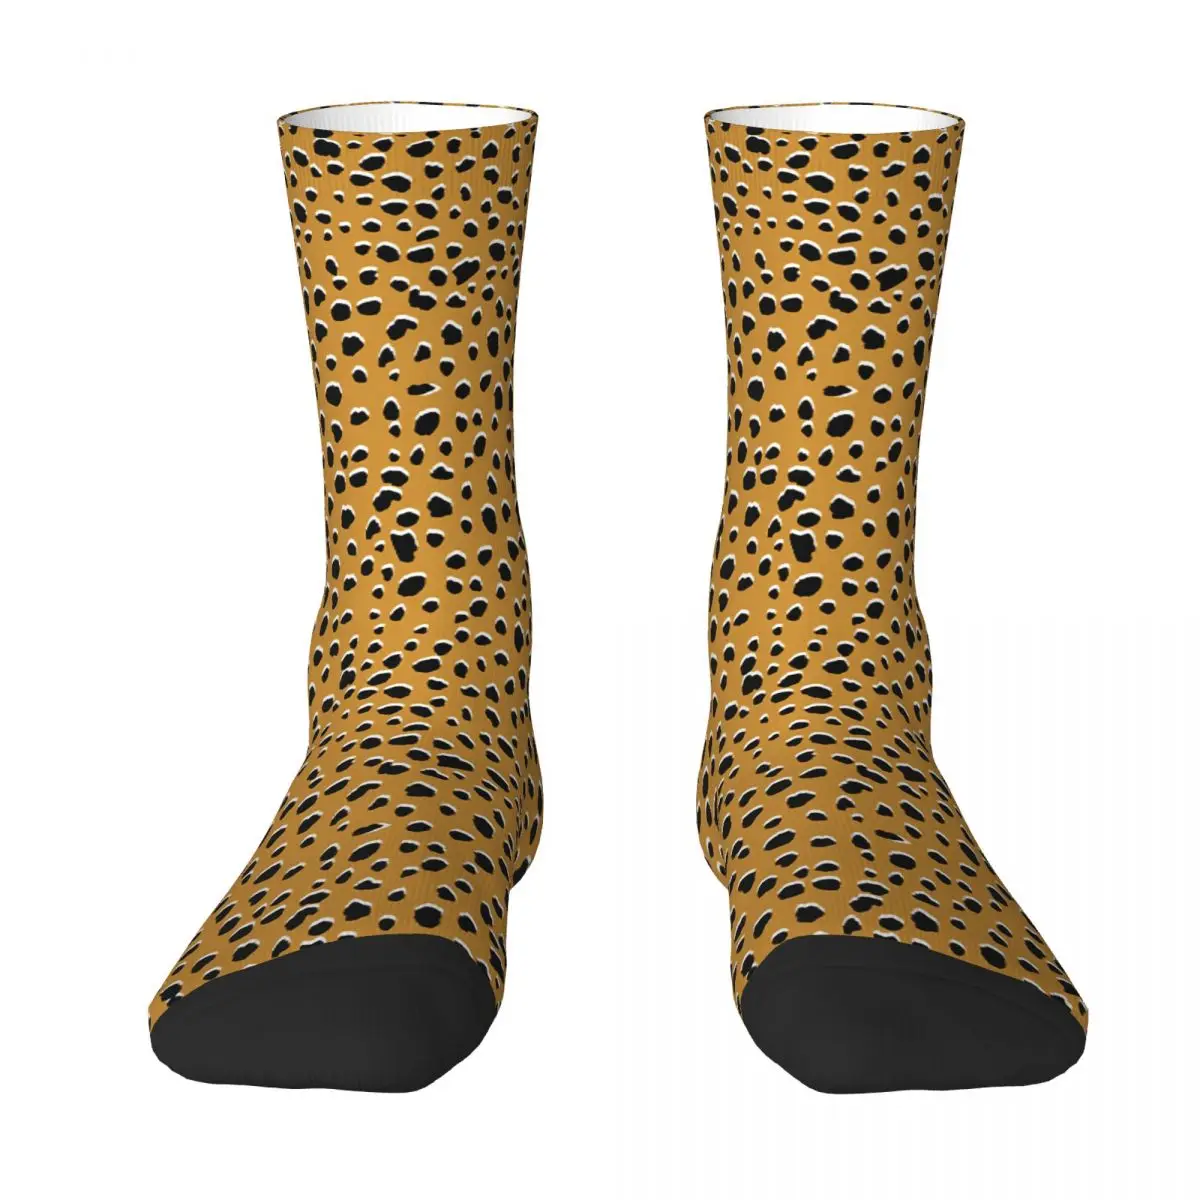 Seamless Leopard Cheetah Skin Pattern Adult Socks,Unisex socks,men Socks women Socks